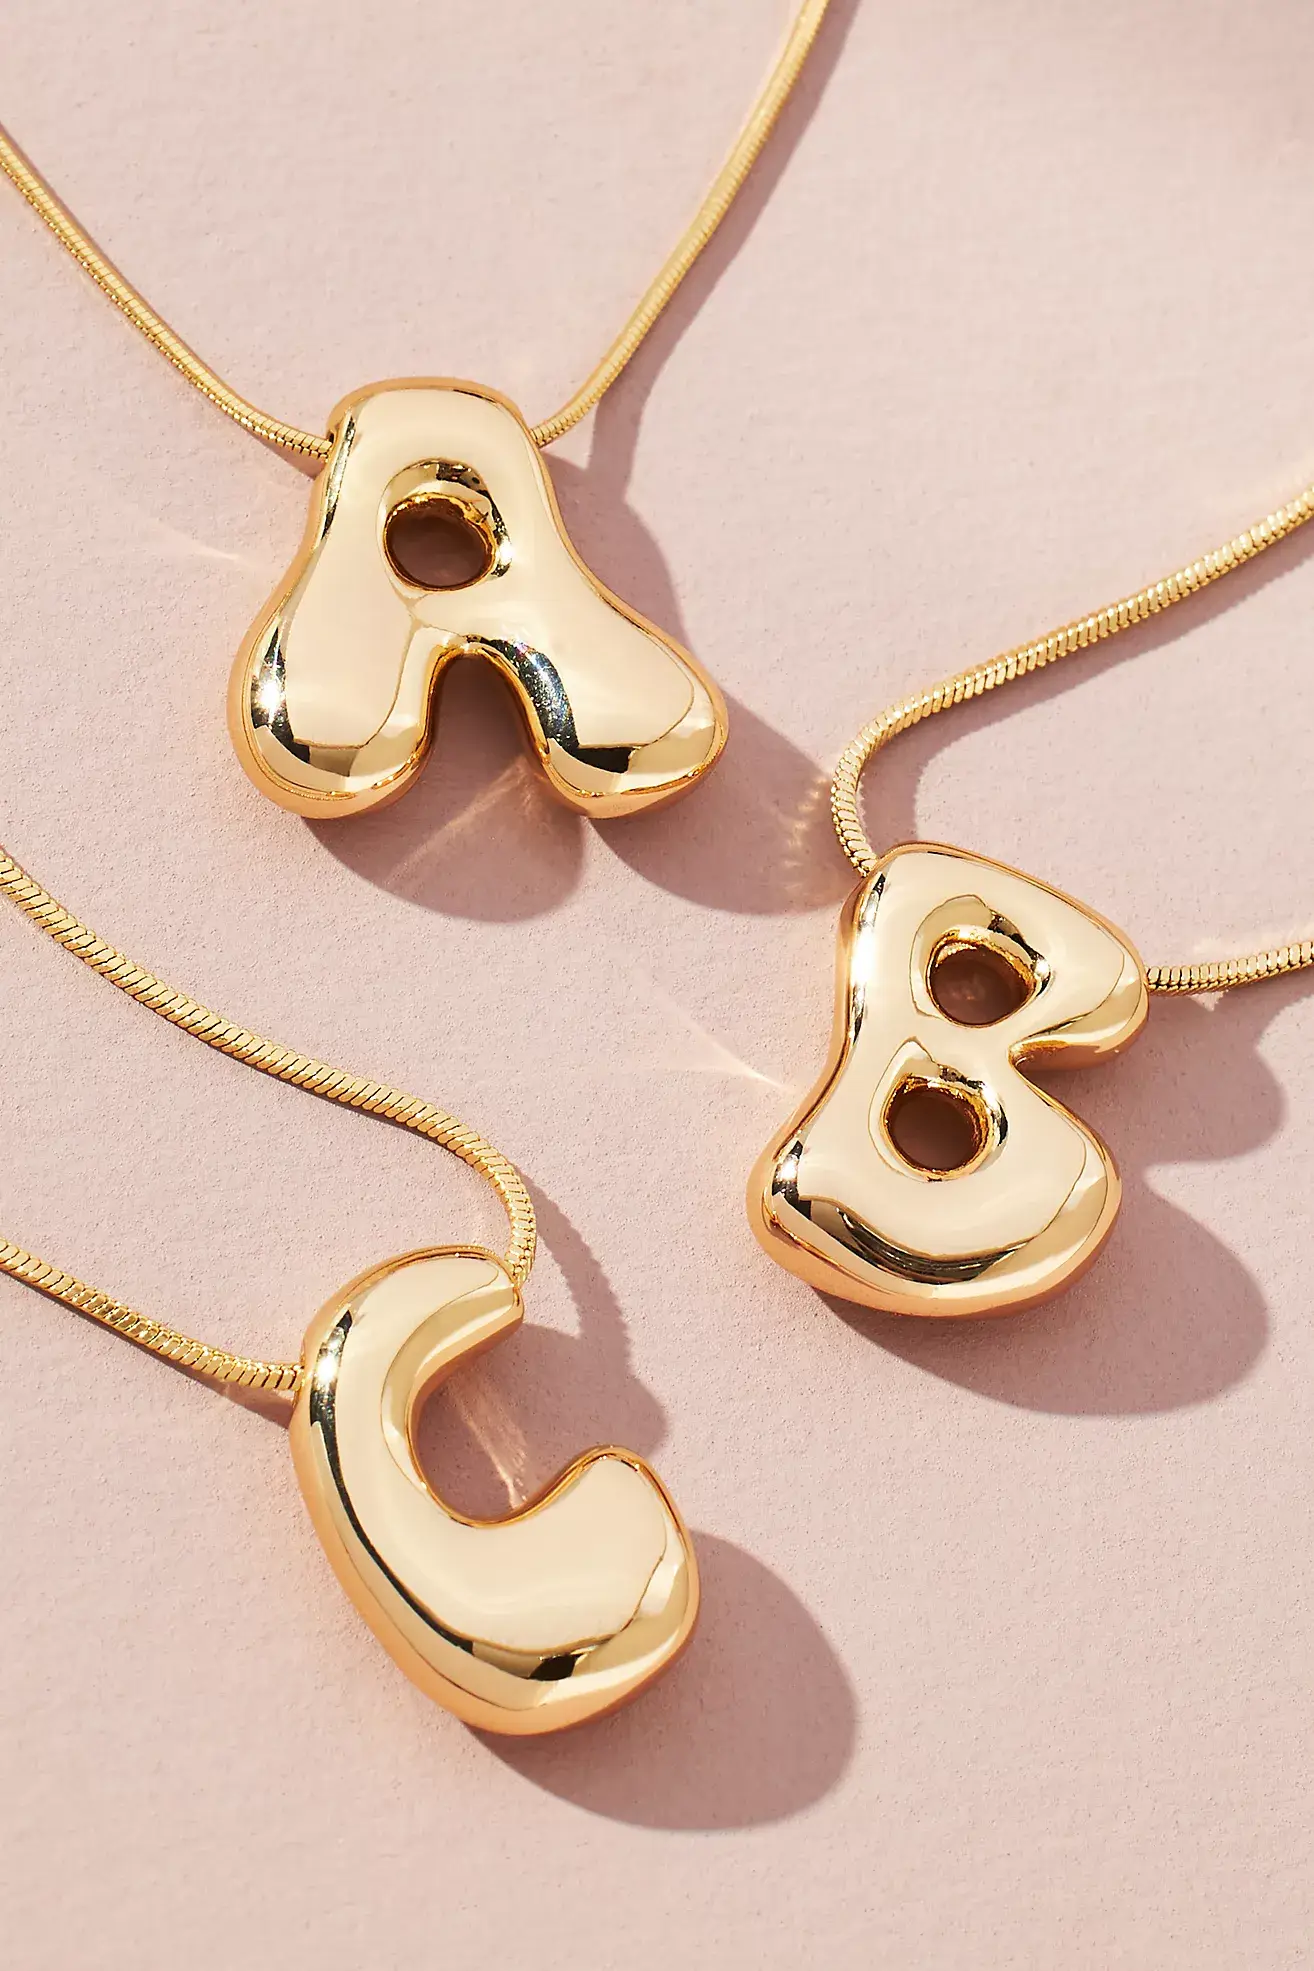 GOLD NECKLACES | Everyday Gold Gemstone Jewellery – Honoura